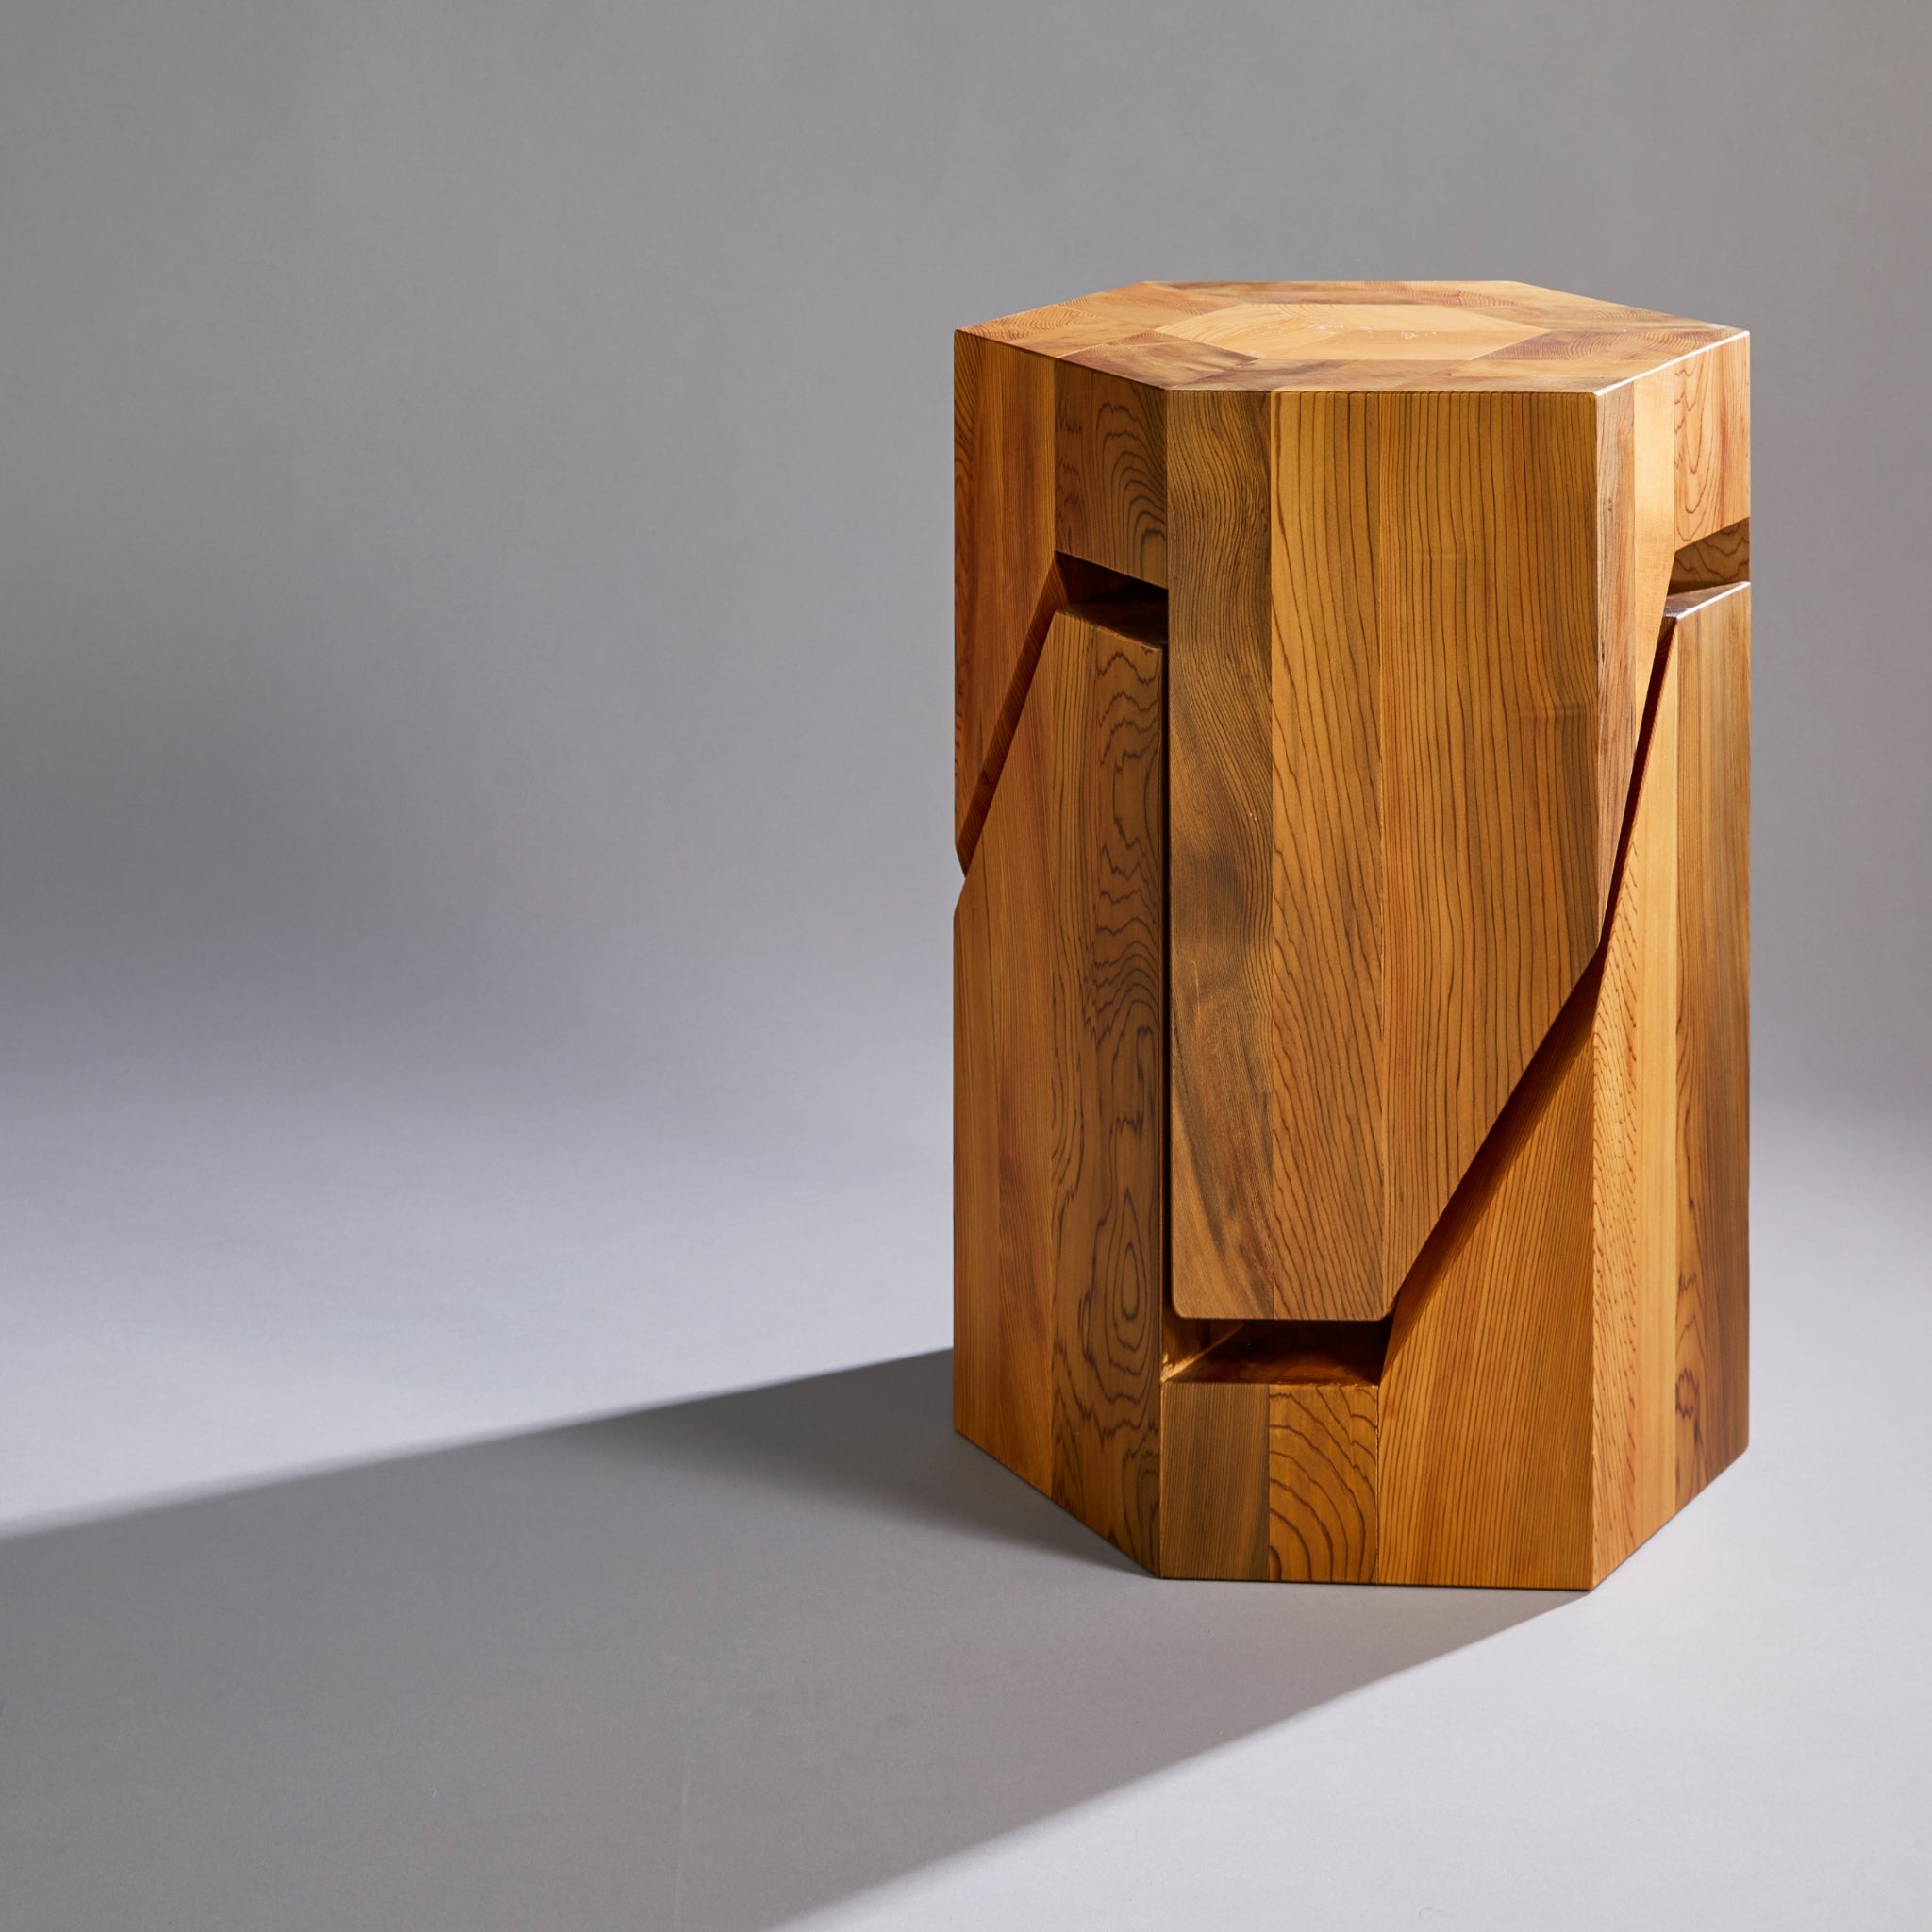 Yosegi Pair Stool - Jindai Cedar Edition -Furniture-Yoshiaki Ito Design japanese furniture style half nest 